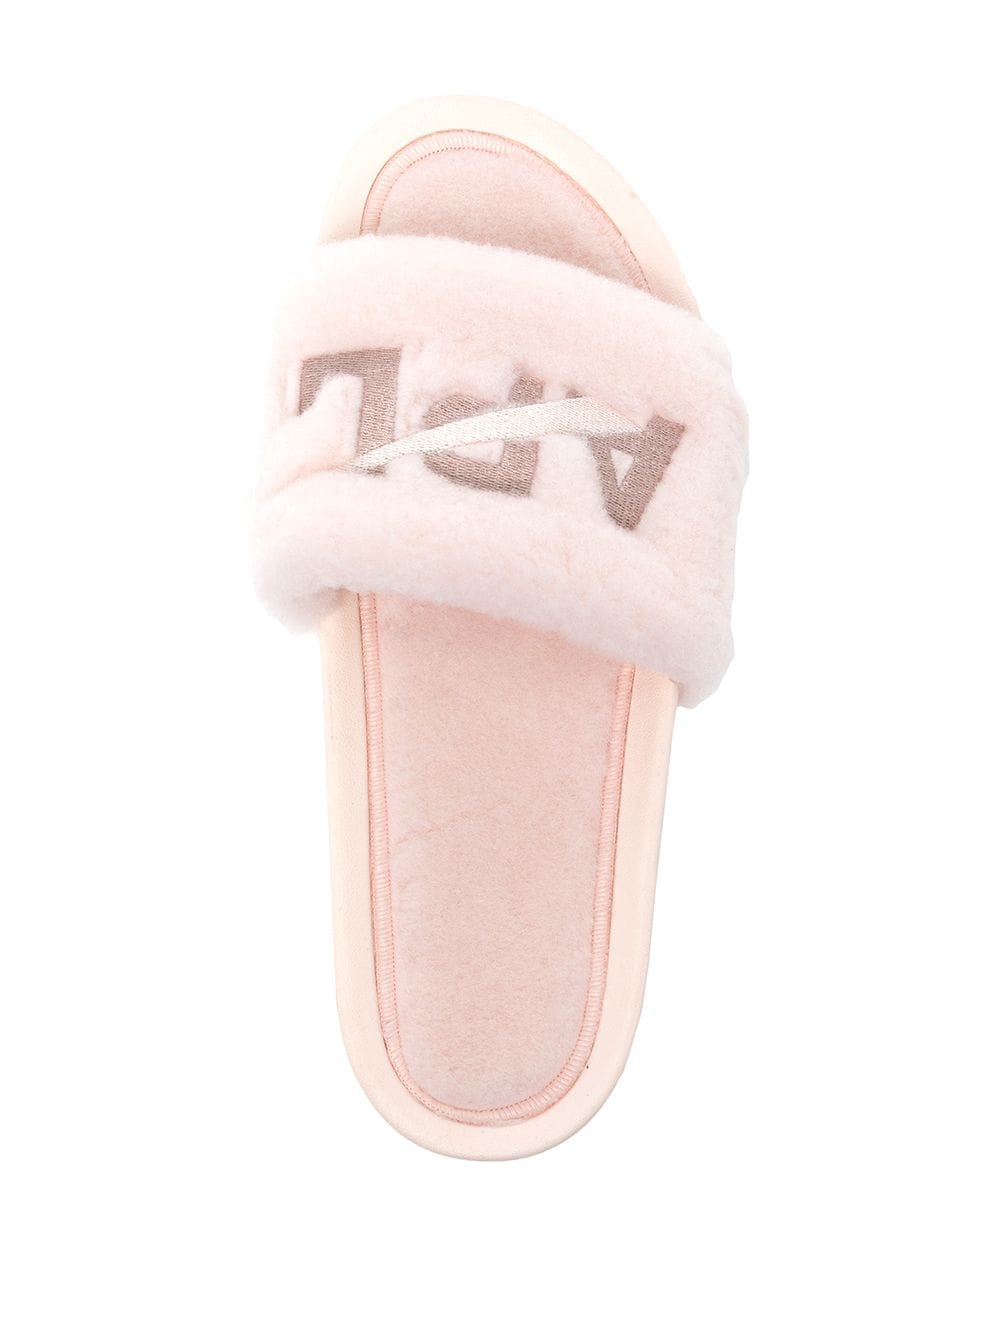 Louis Vuitton Fur Slippers Pink